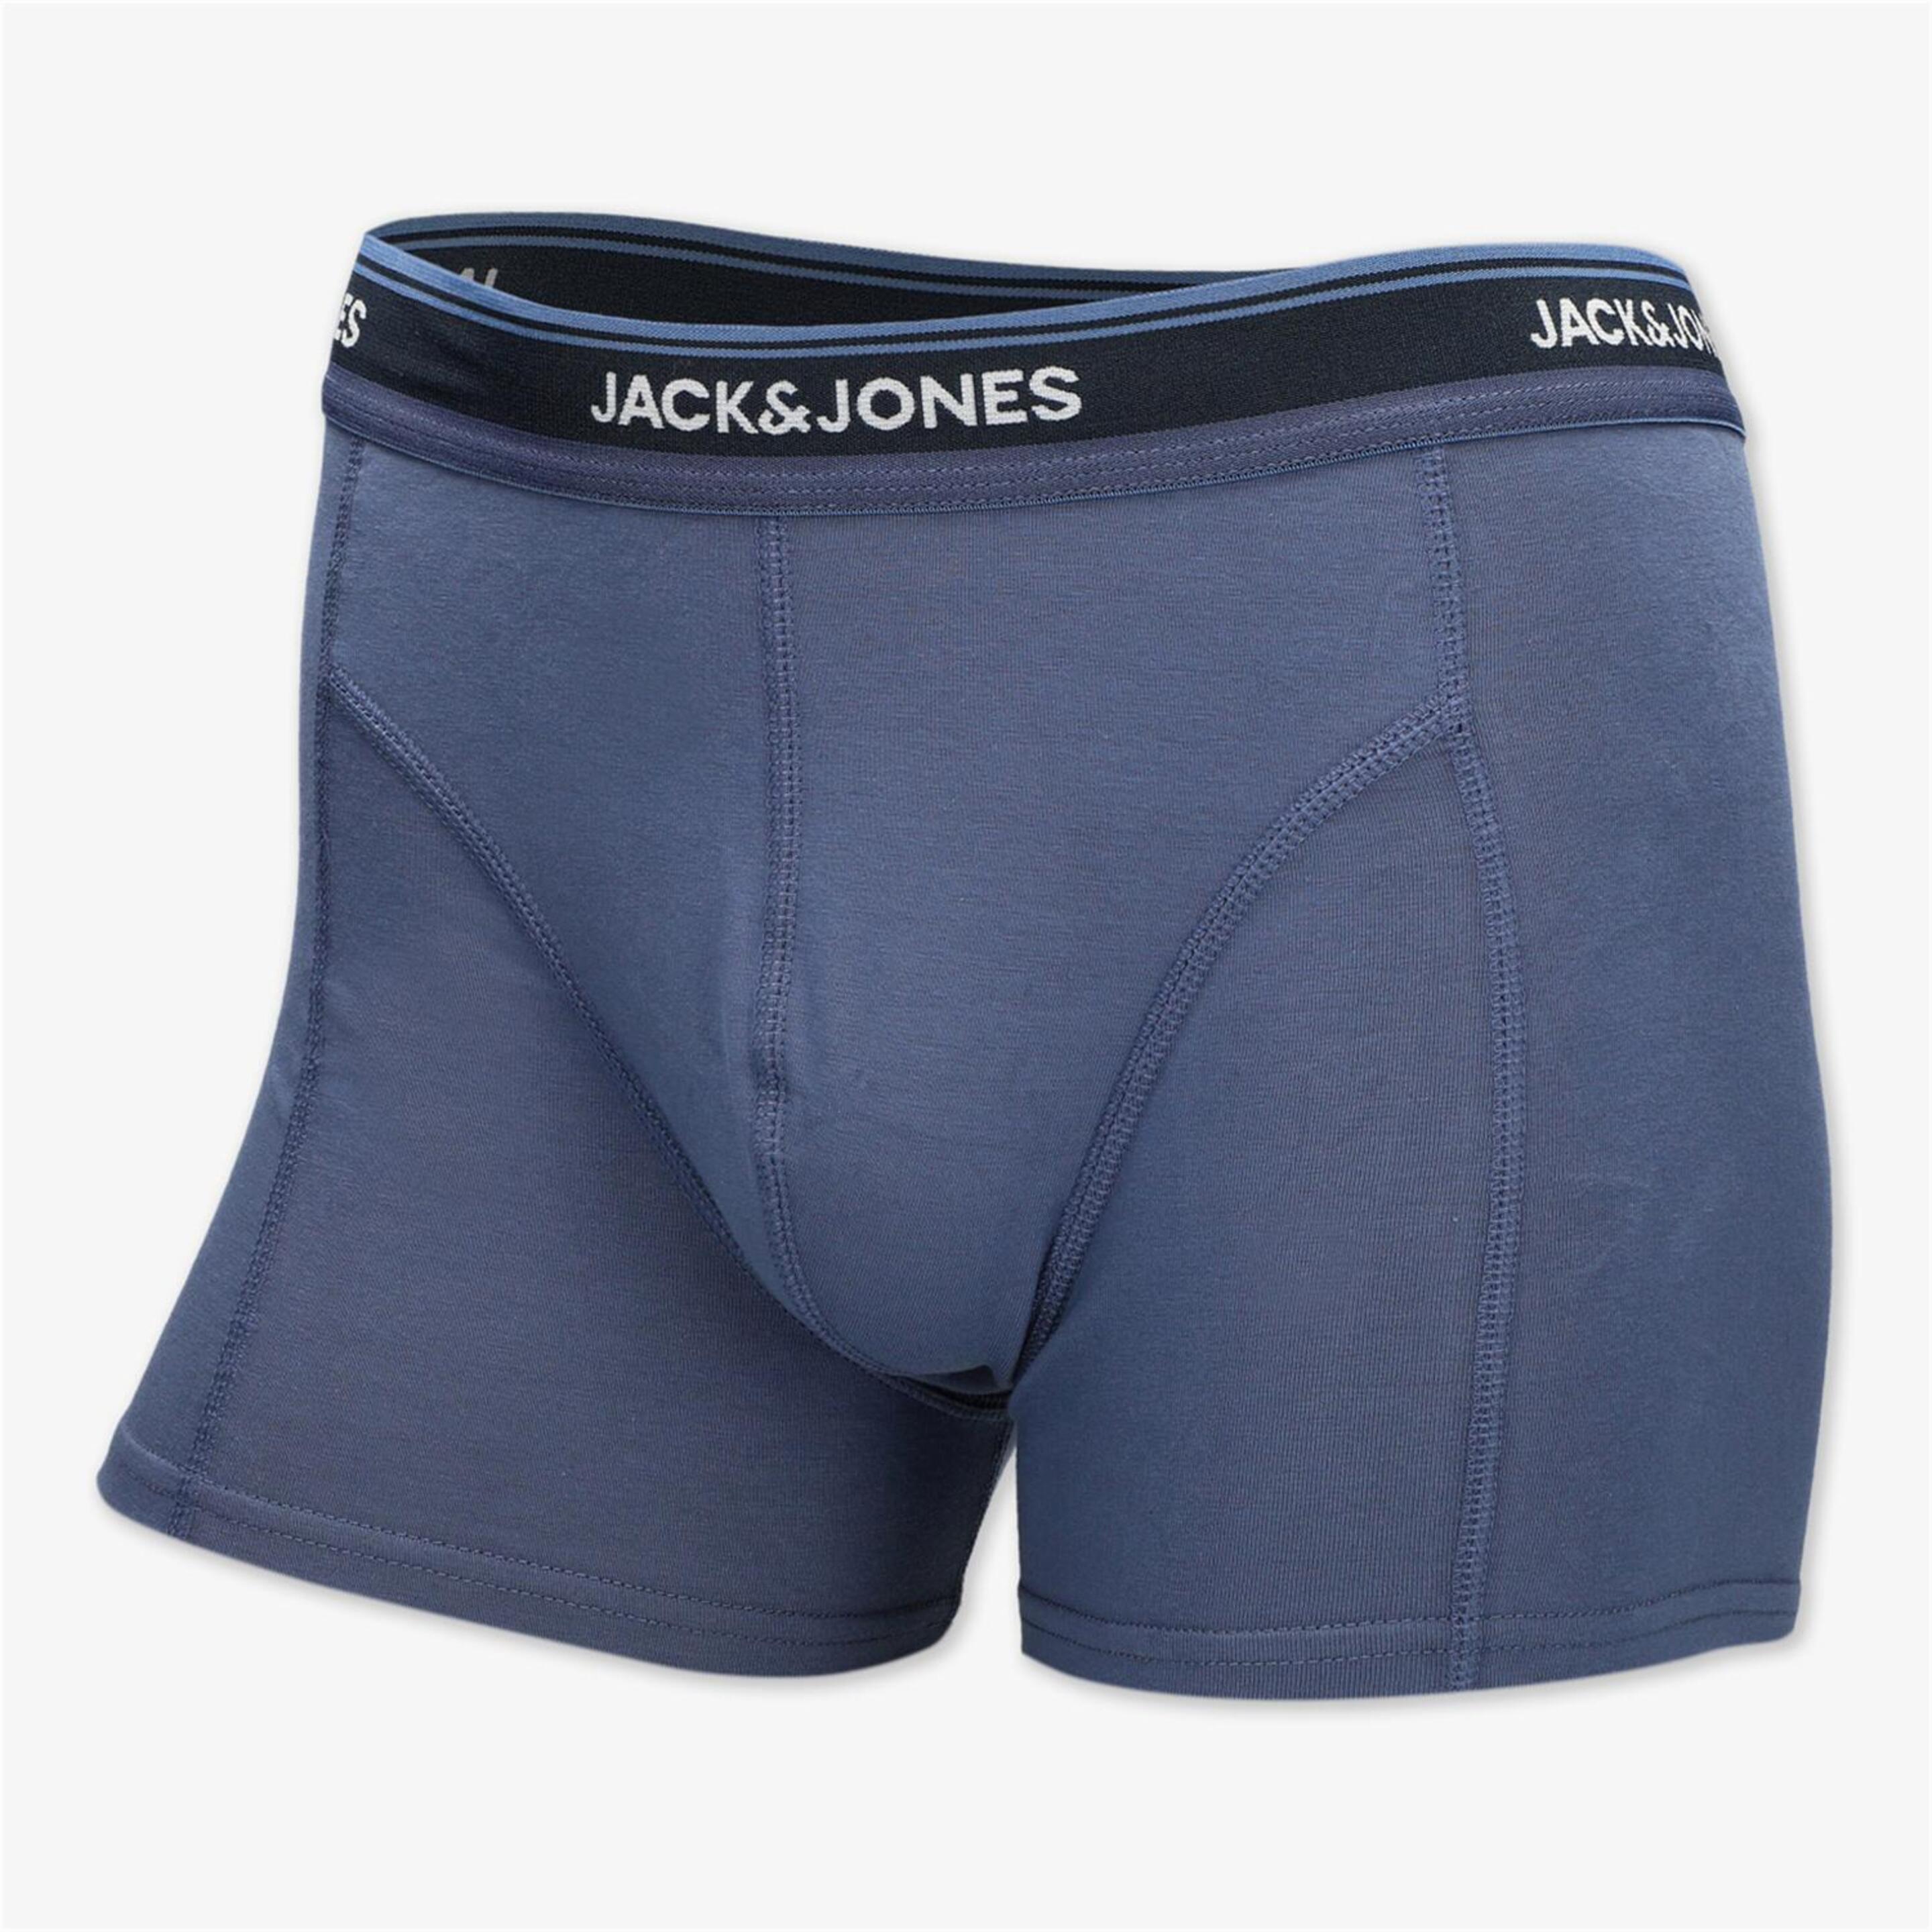 Jack & Jones Jacwells - Azul - Calzoncillos Bóxer